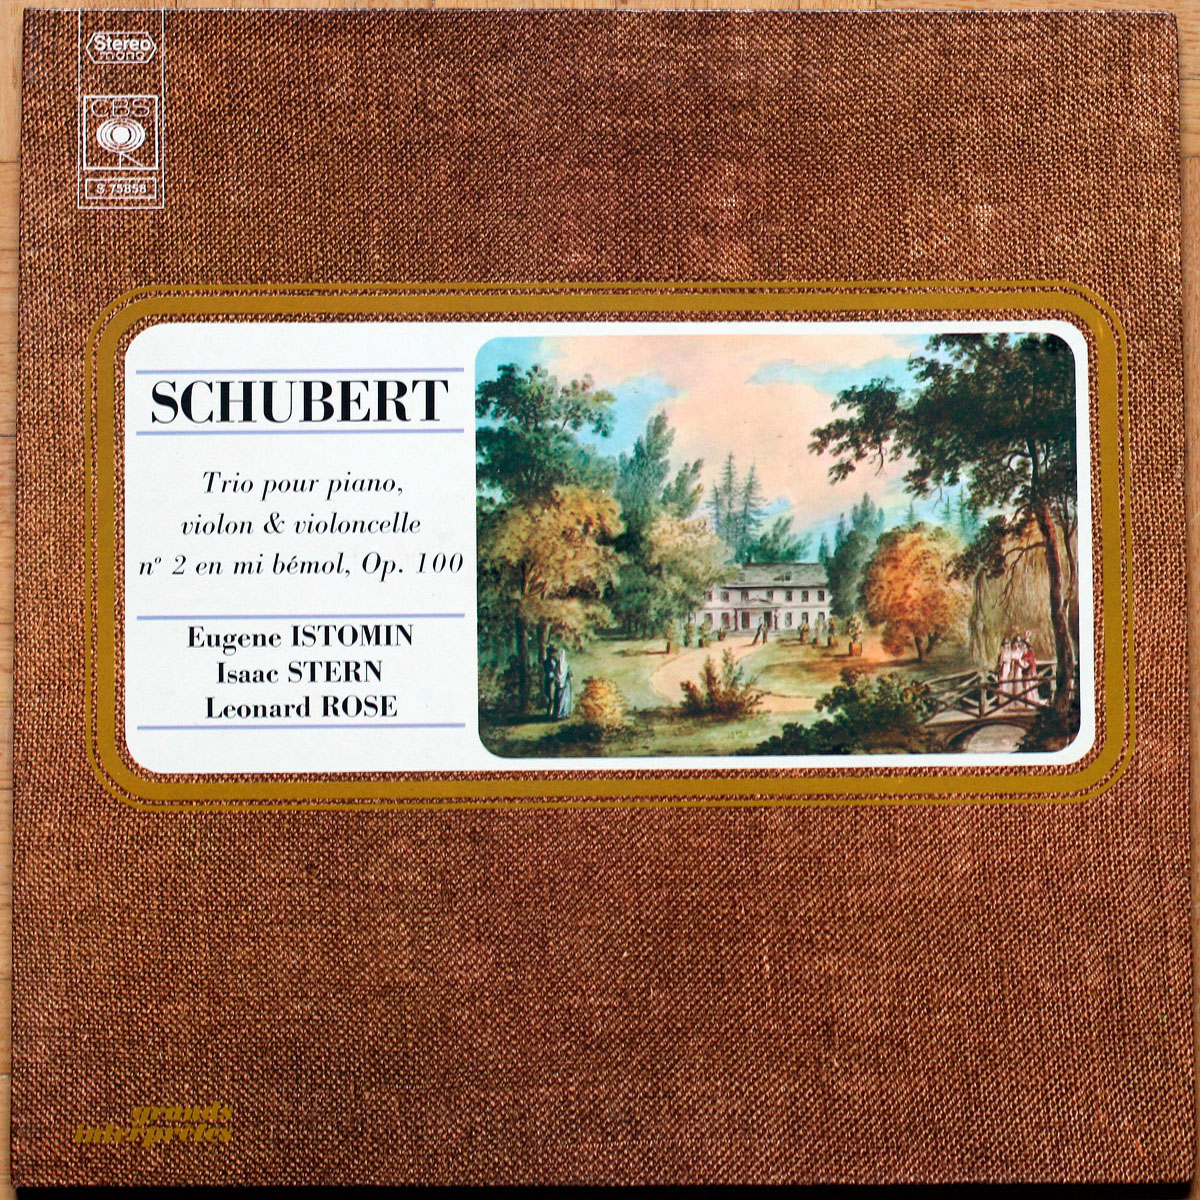 Schubert • Trio pour piano & violon & violoncelle n° 2 • Trio for piano & violin & cello n° 2 • Op. 100 • CBS 76077 • Eugene Istomin • Isaac Stern • Leonard Rose